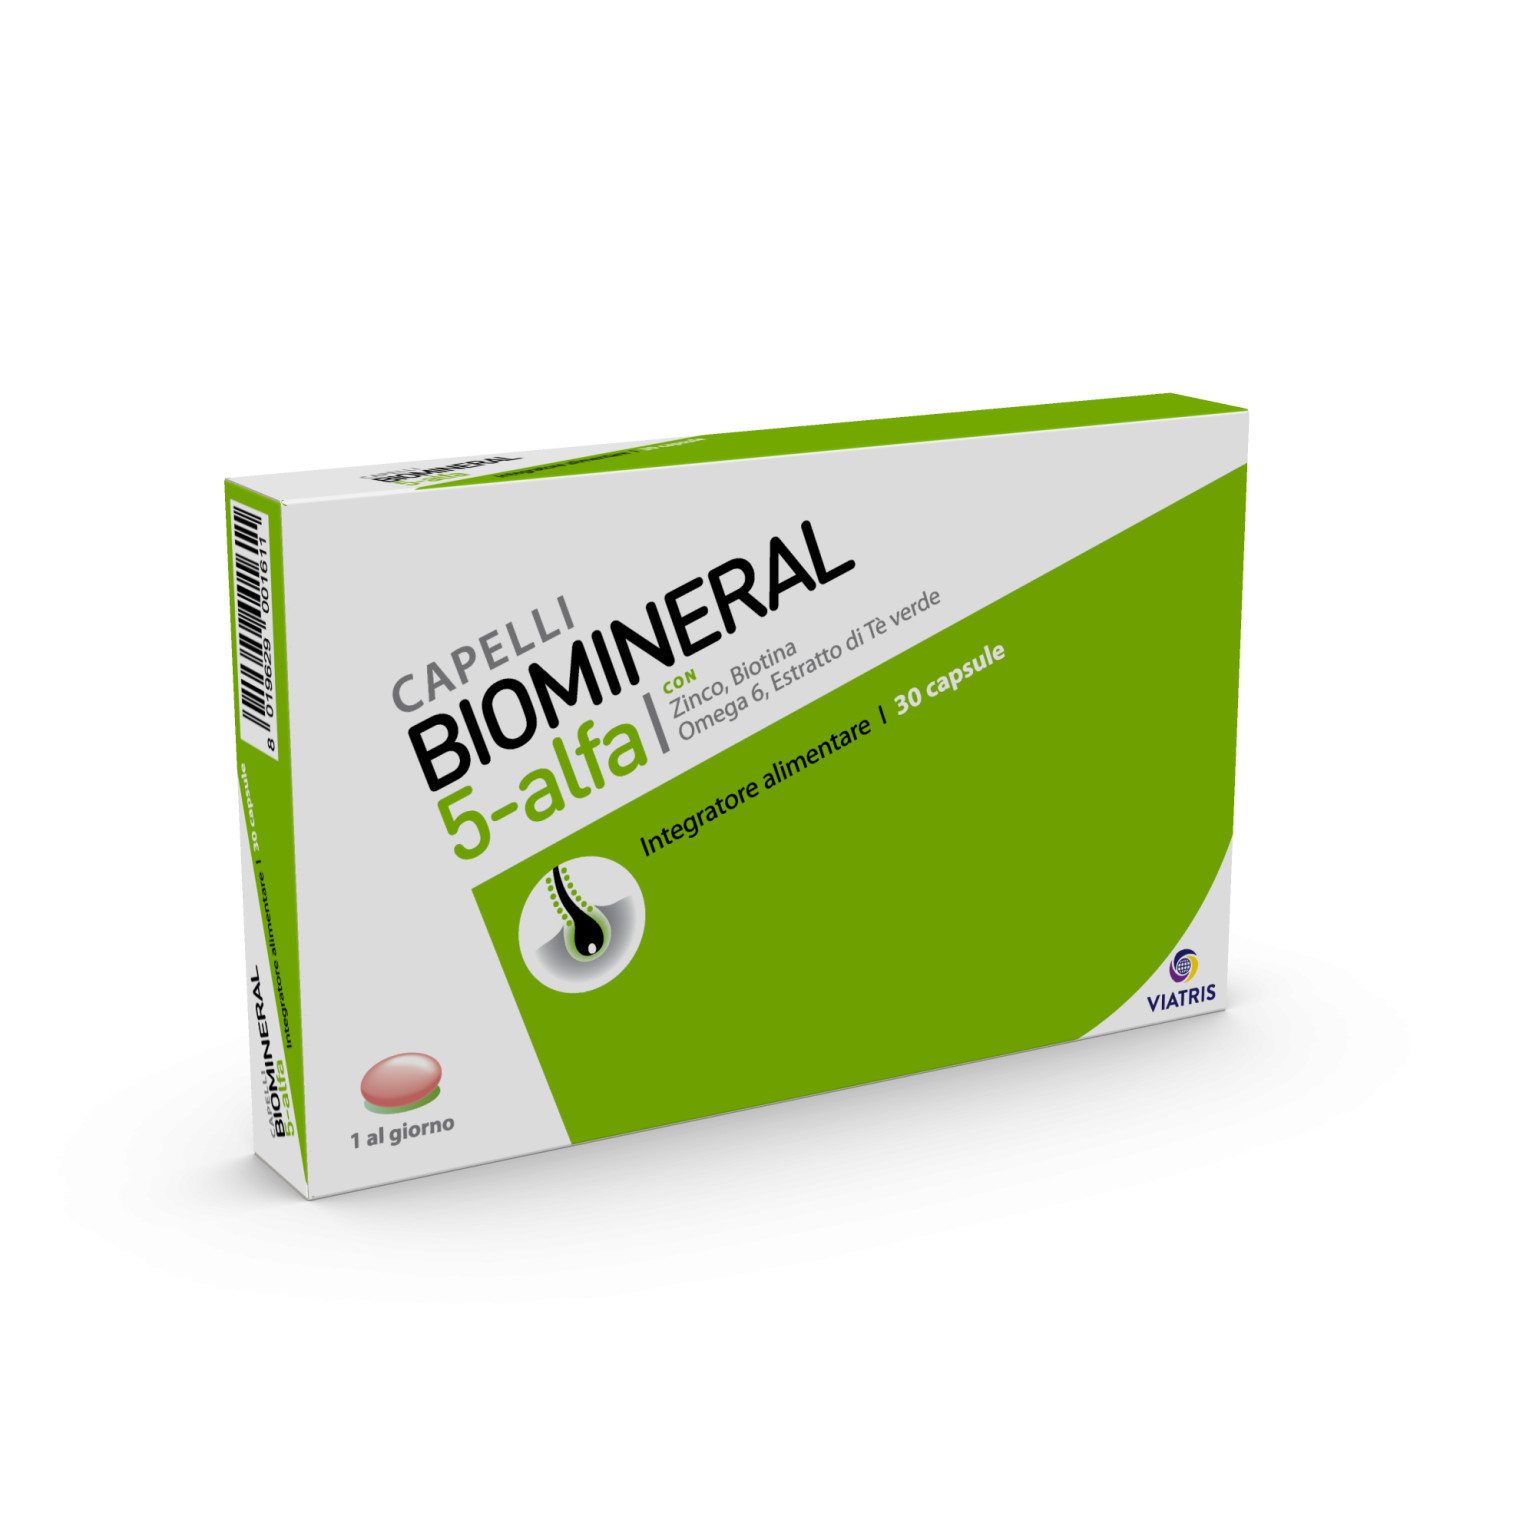 901261368 - Biomineral 5 Alfa Integratore Capelli 30 perle - 7872855_3.jpg